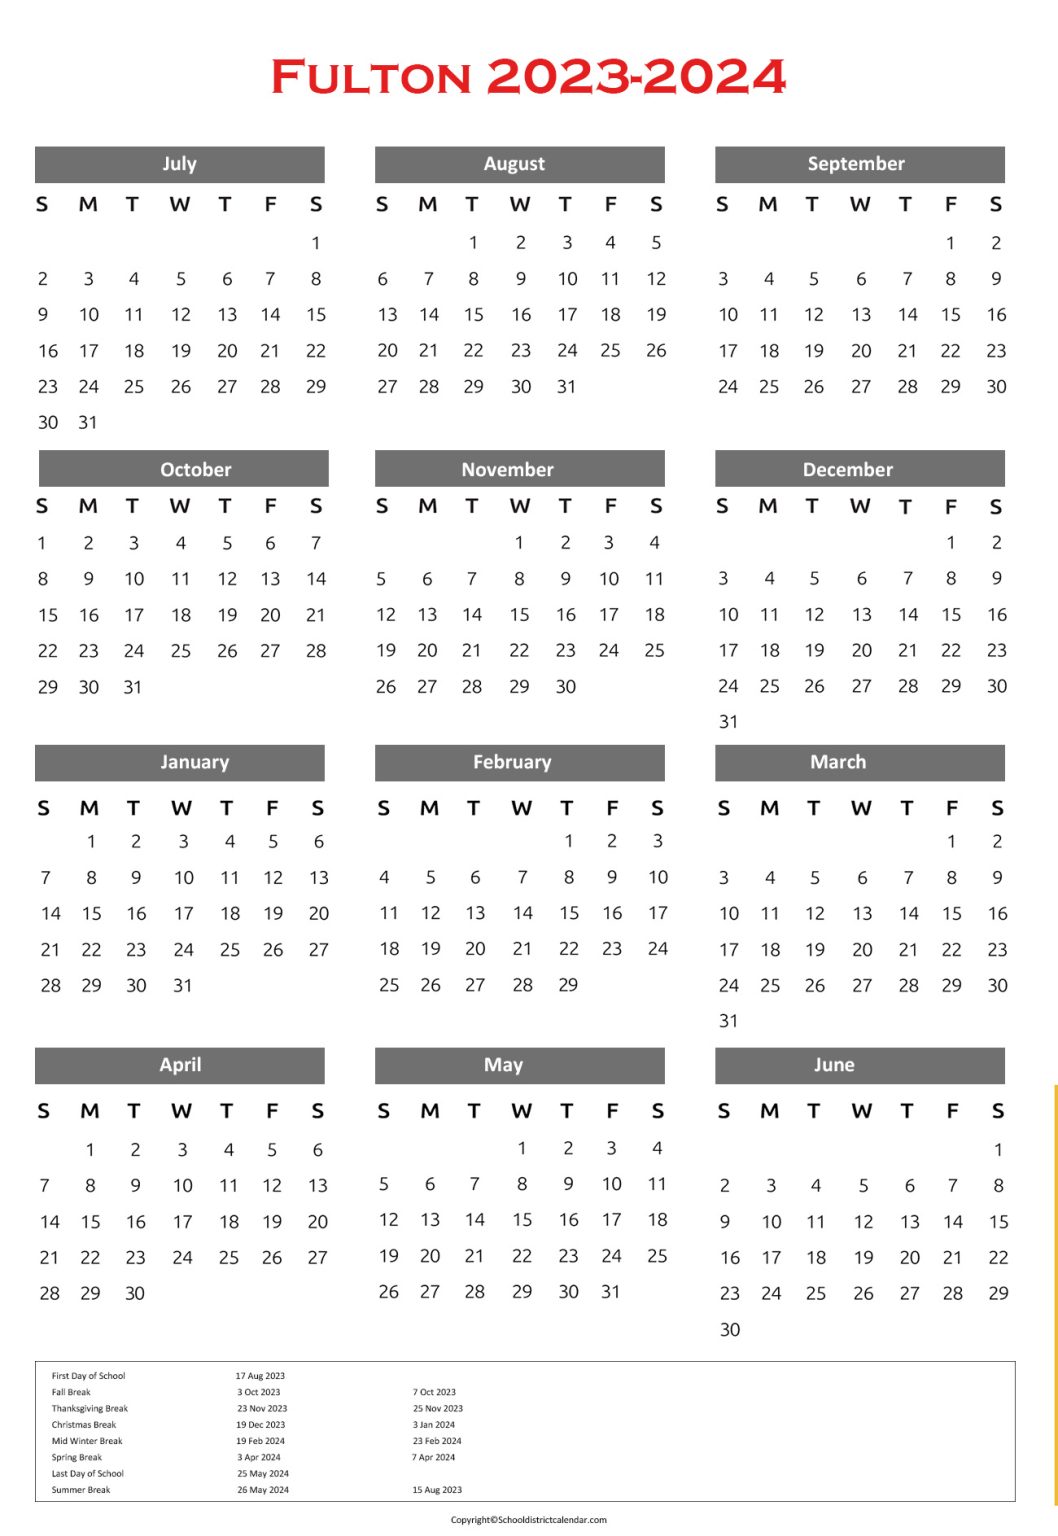 Fulton County Schools Calendar Holidays 2023 2024